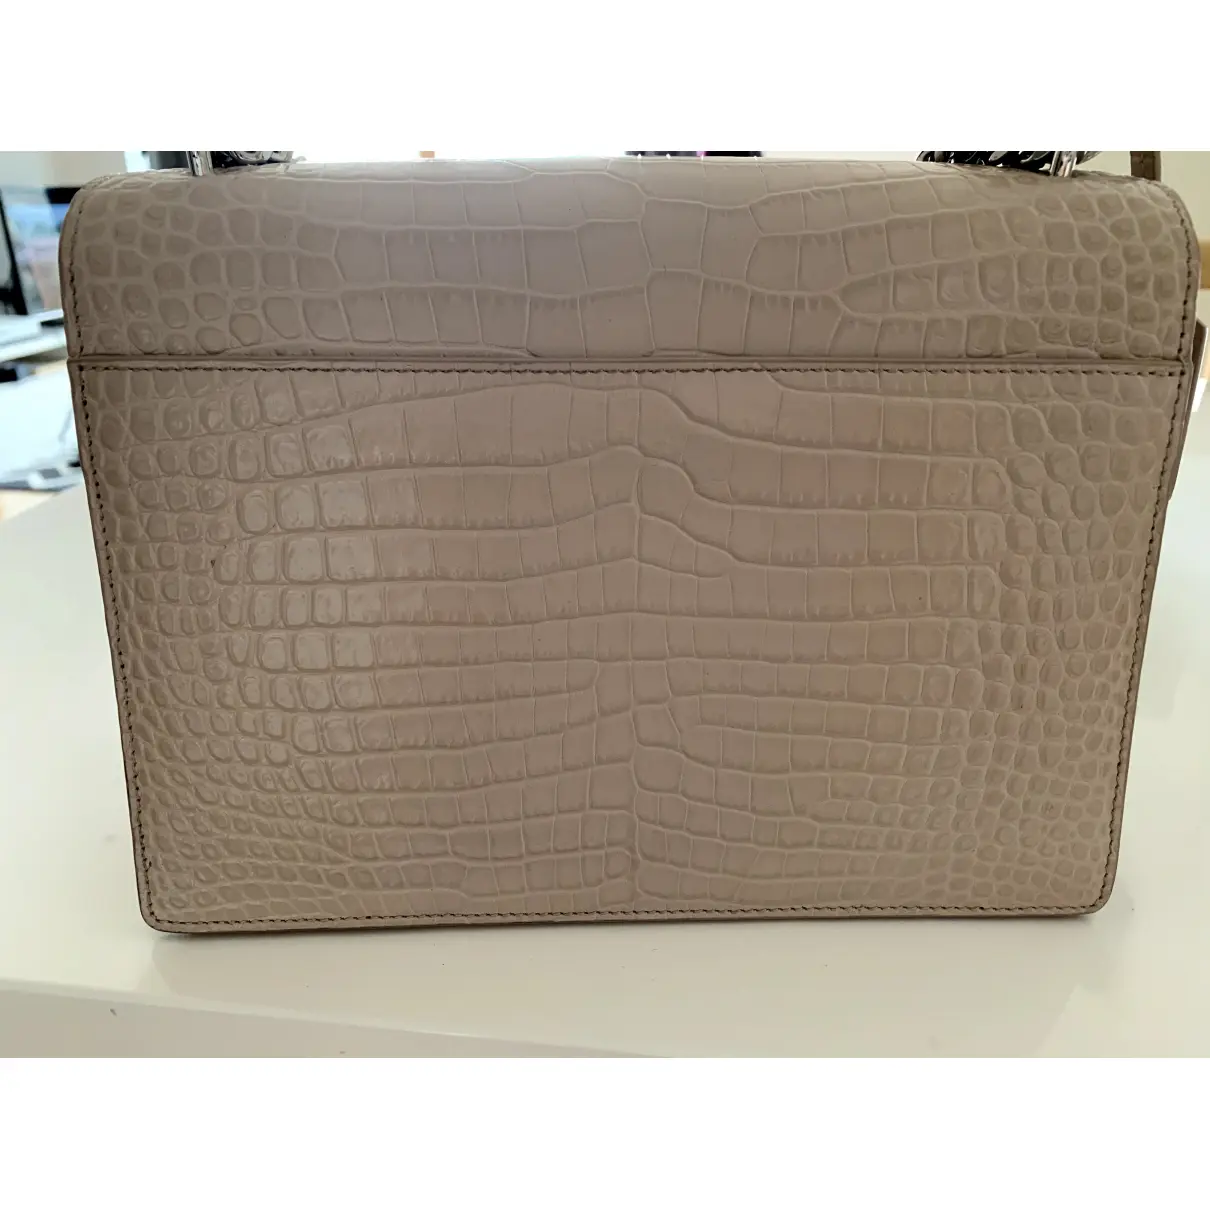 Buy Saint Laurent Sunset patent leather handbag online